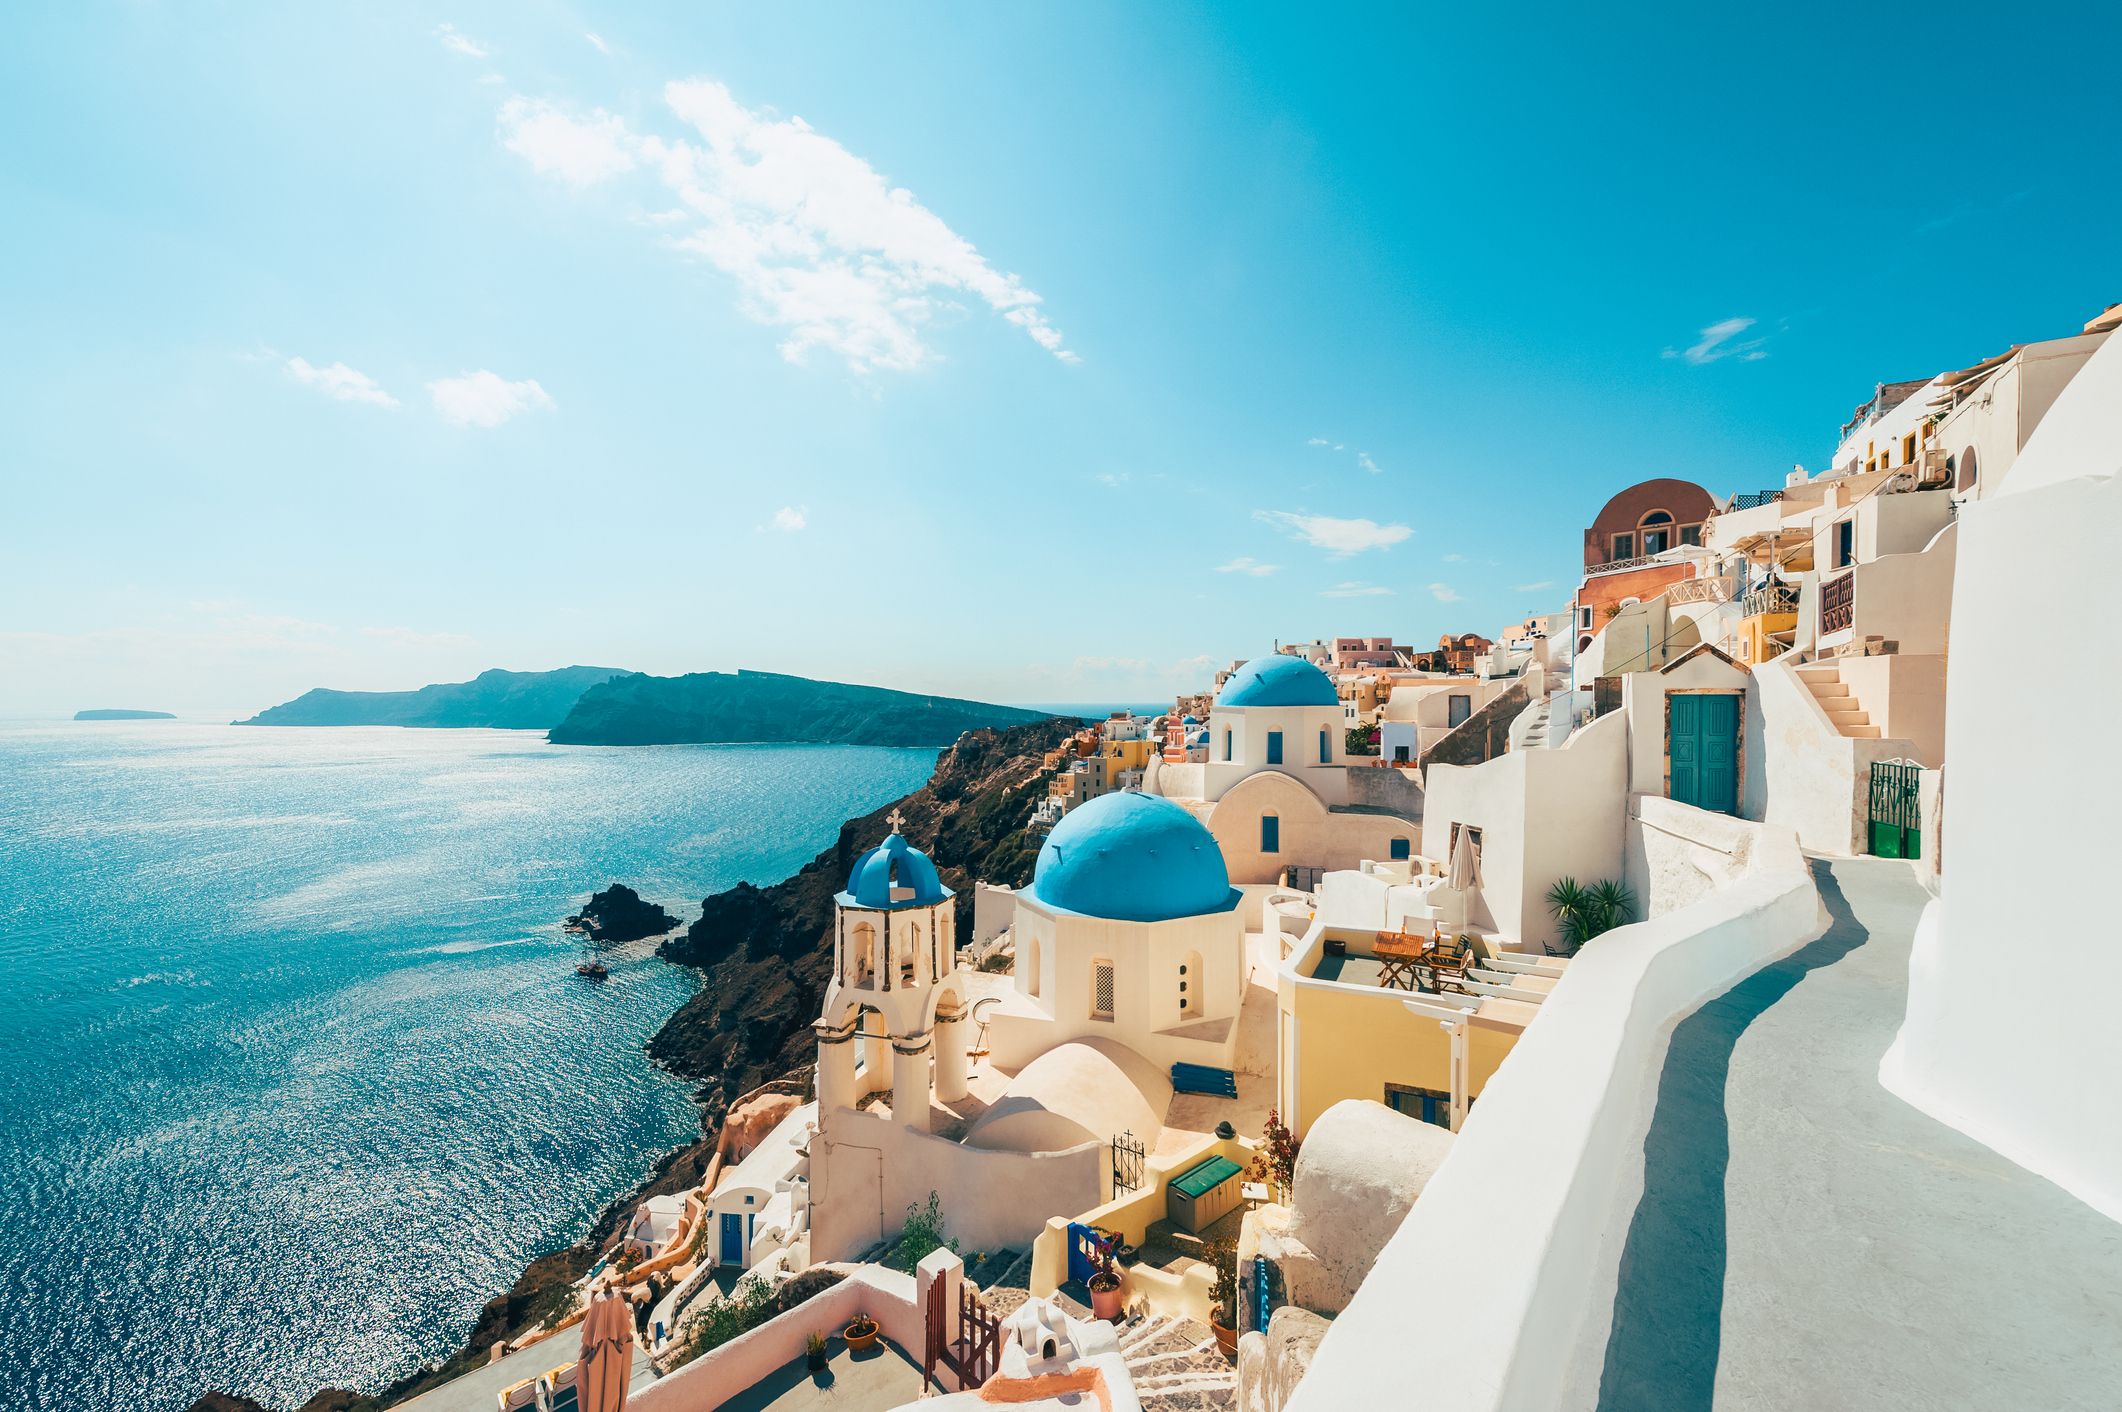 Oia, Santorini travel guide: Greece's most photogenic village